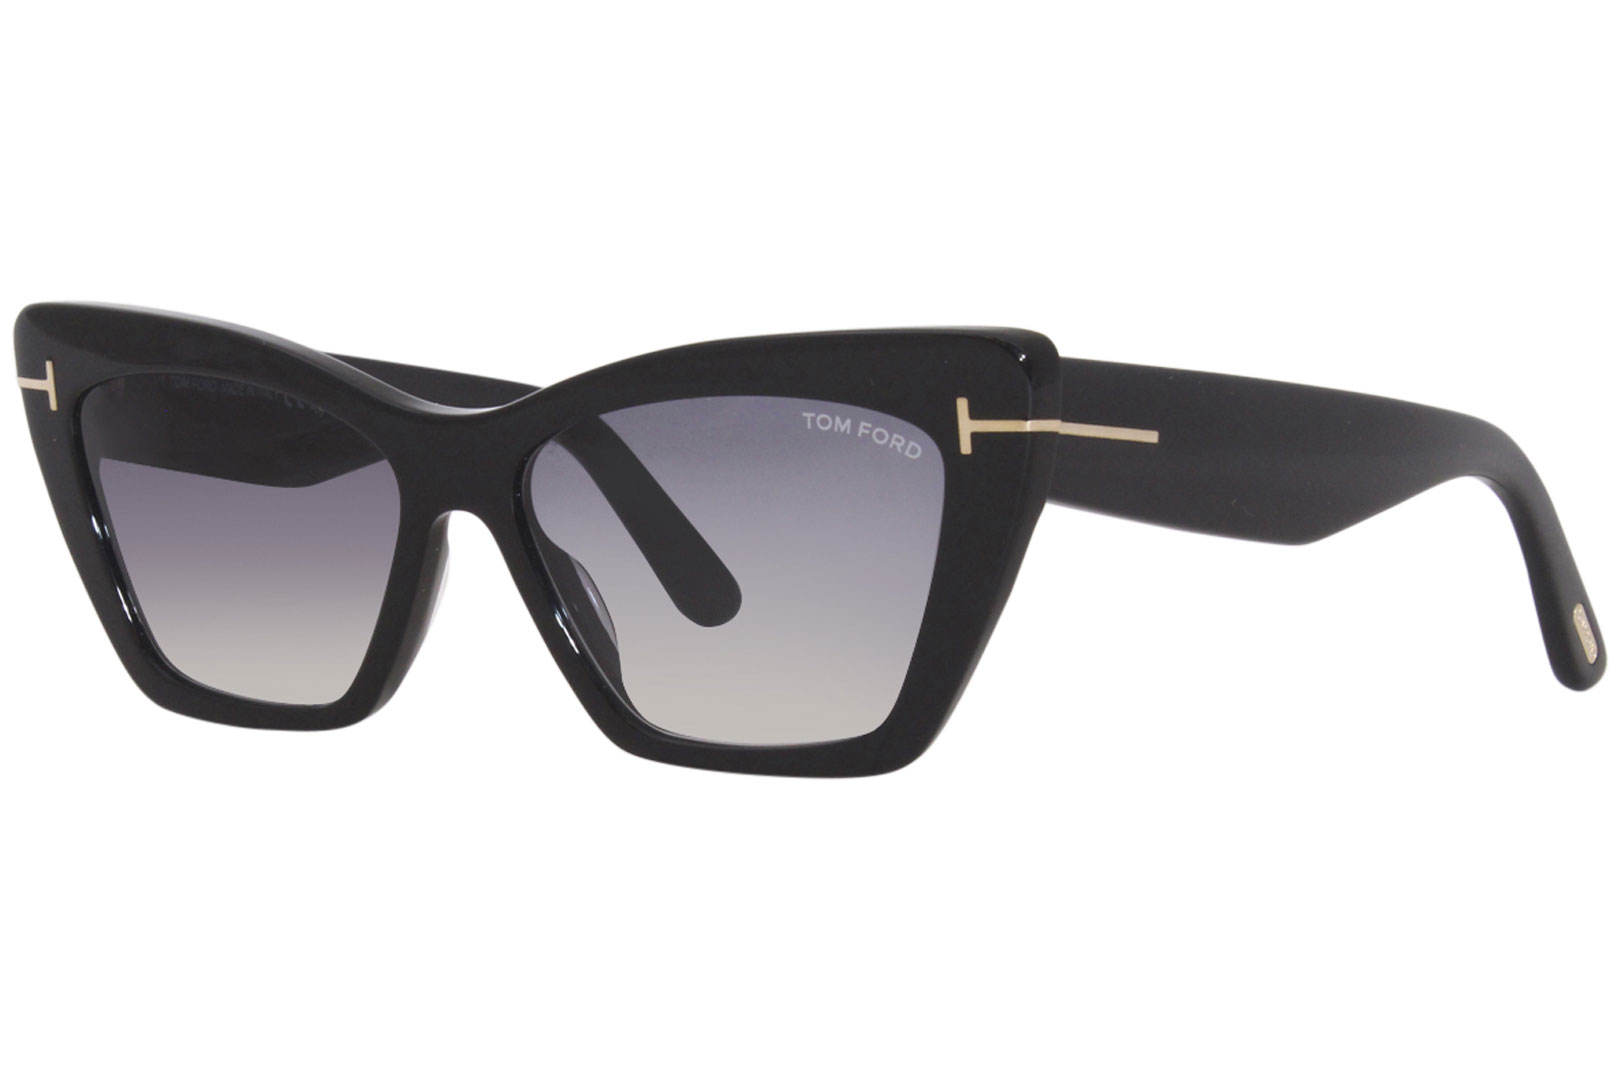 https://www.eyespecs.com/gallery-option/554277924/1/tom-ford-wyatt-tf871-sunglasses-womens-cat-eye-shiny-black-smoke-gradient-01b-1.jpg